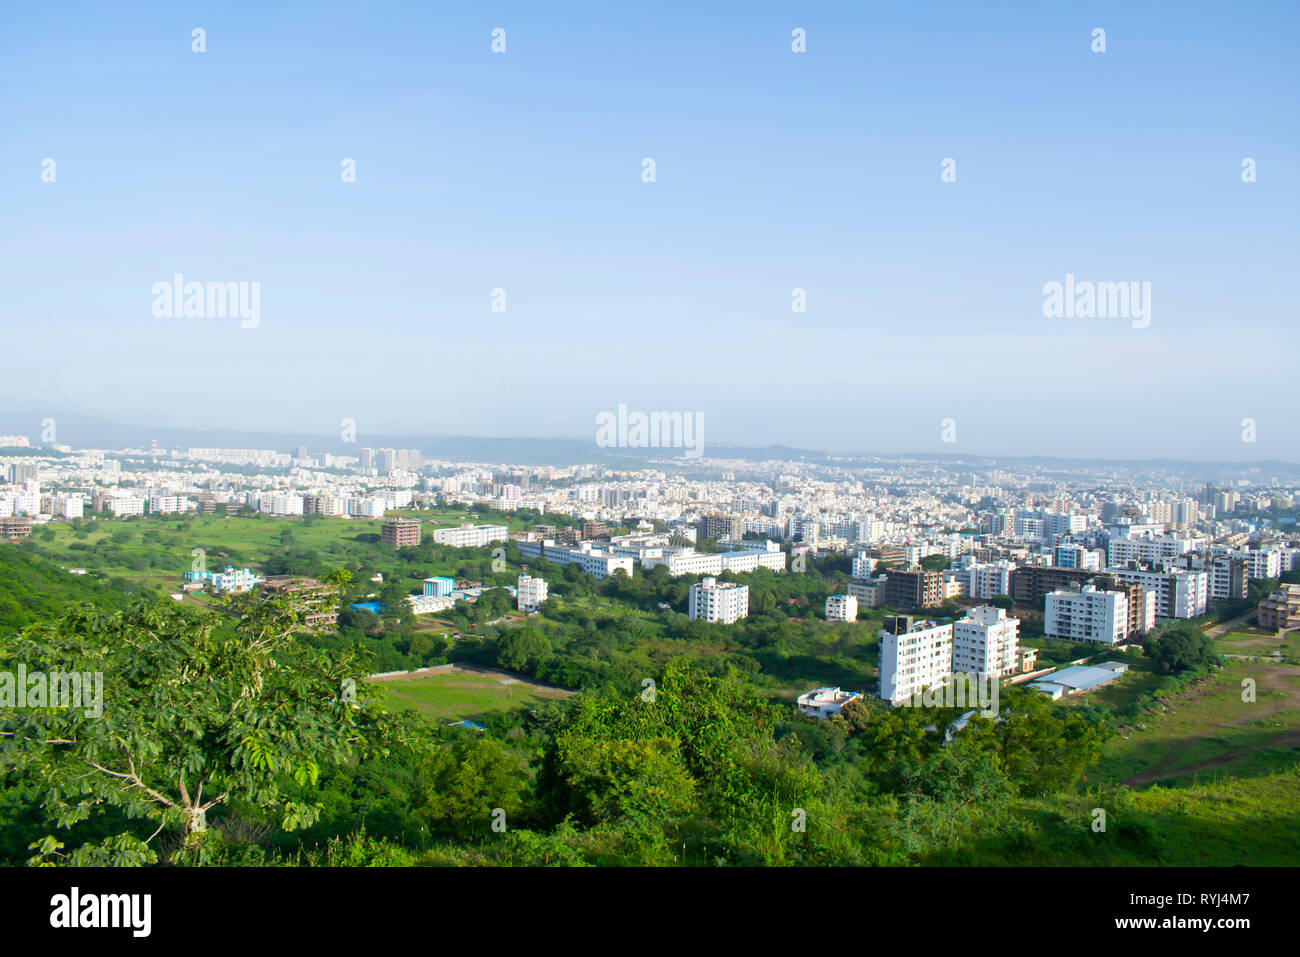 City view from the hill, Pune, Maharashtra, India Stock Photo